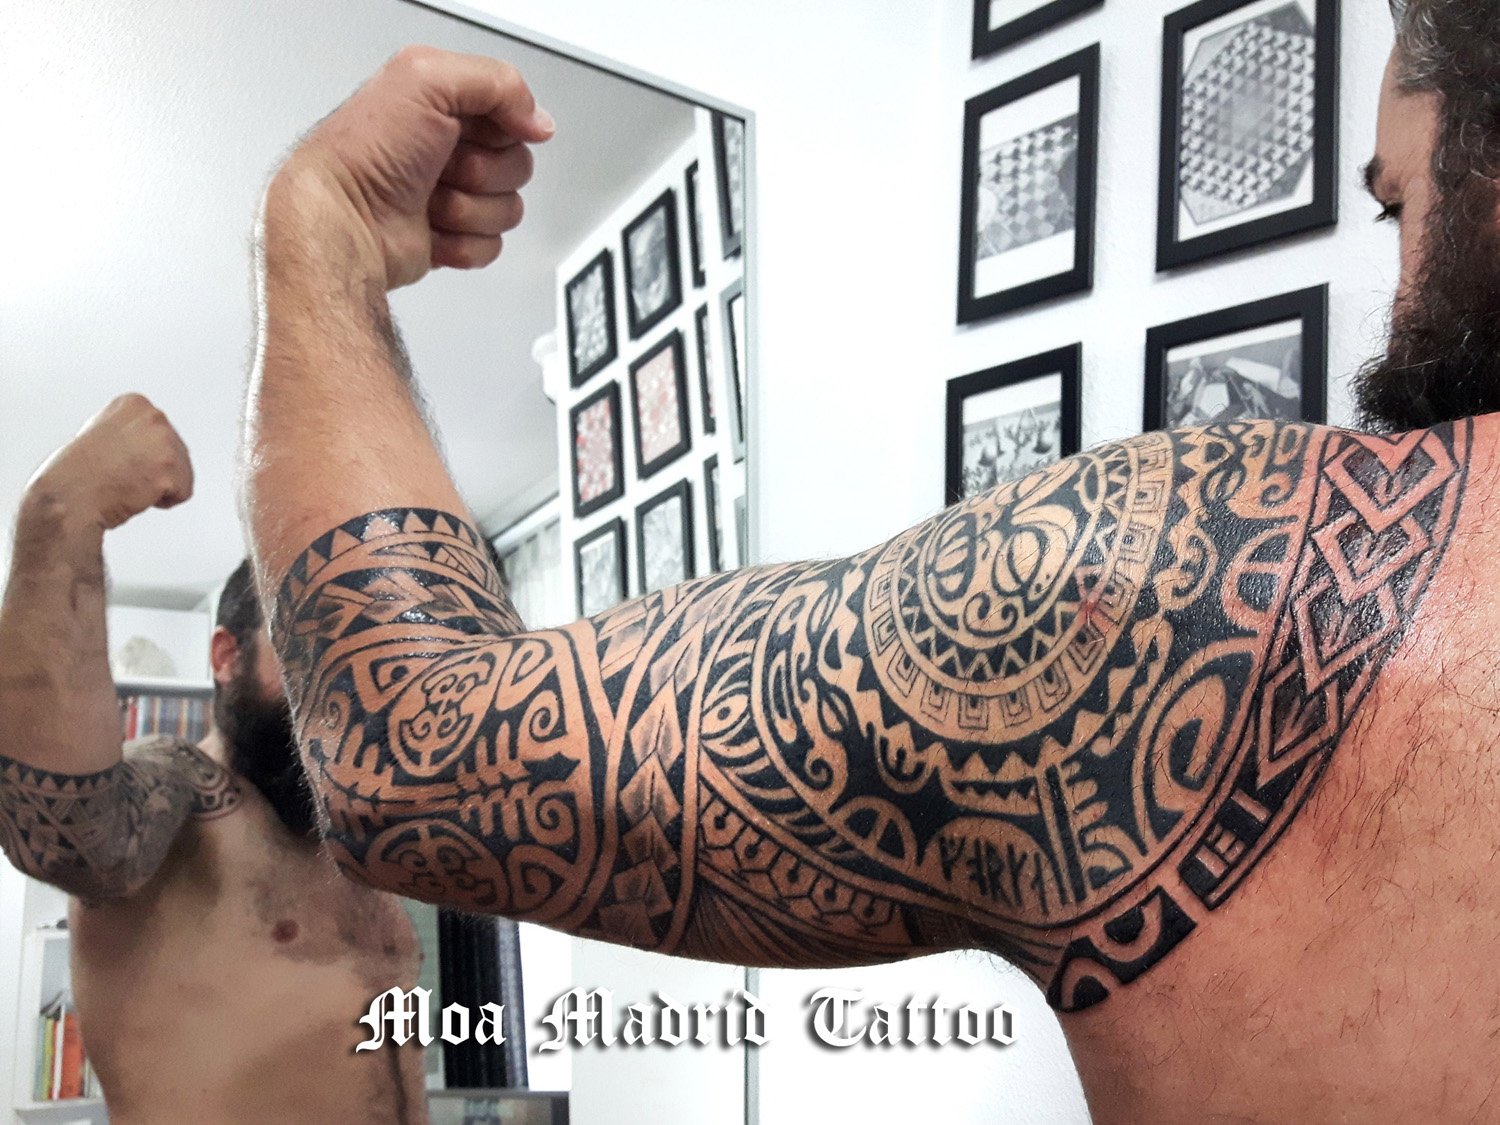 Tatuaje completo maorí en el brazo